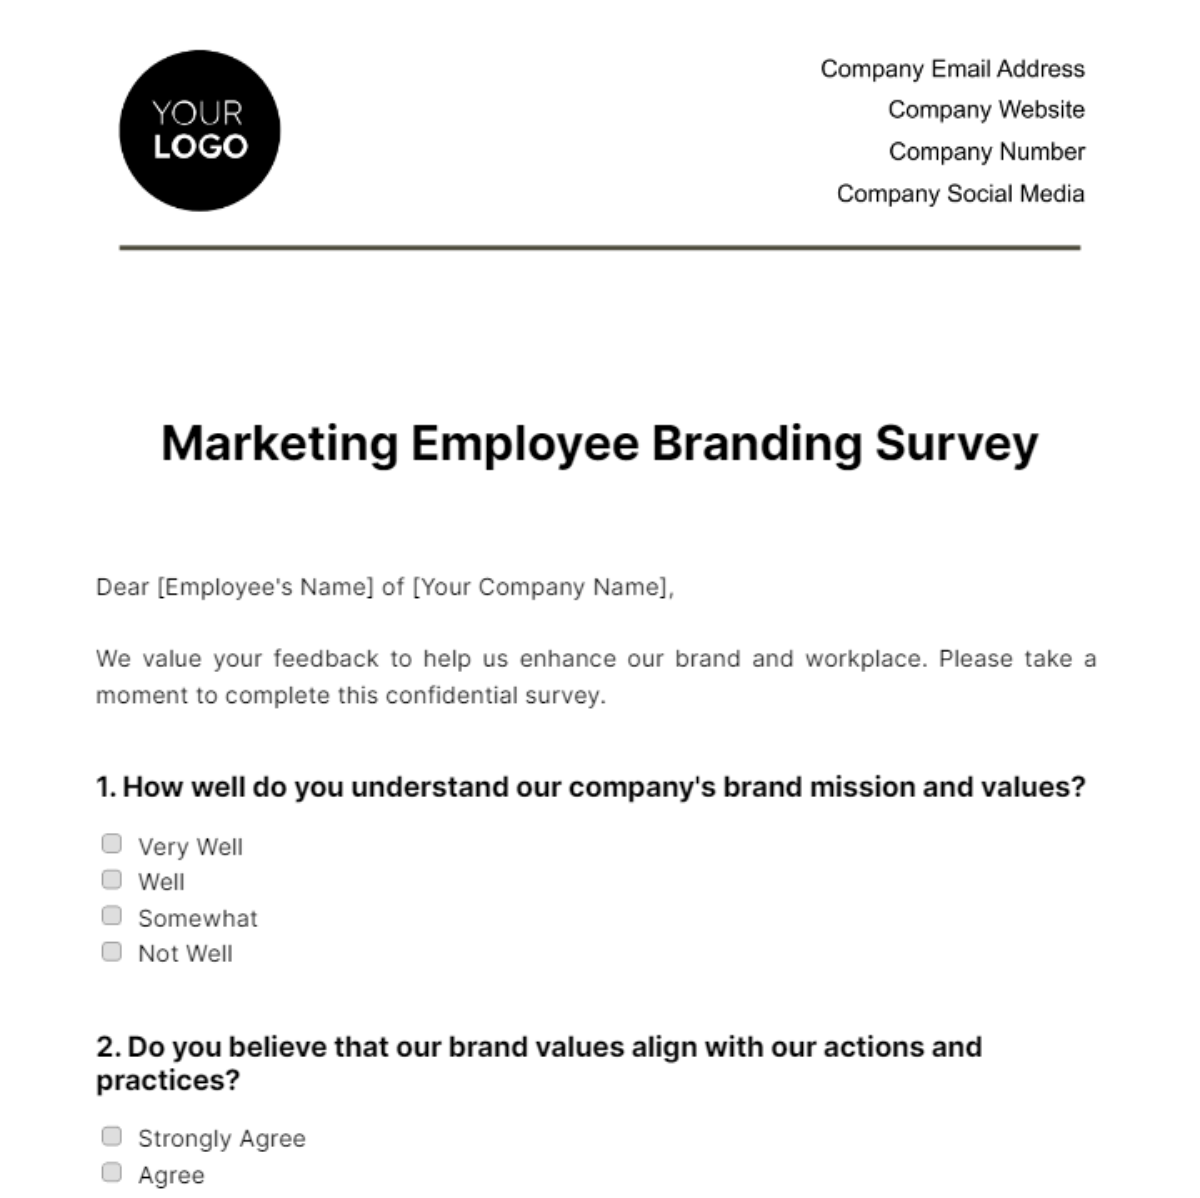 Marketing Employee Branding Survey Template